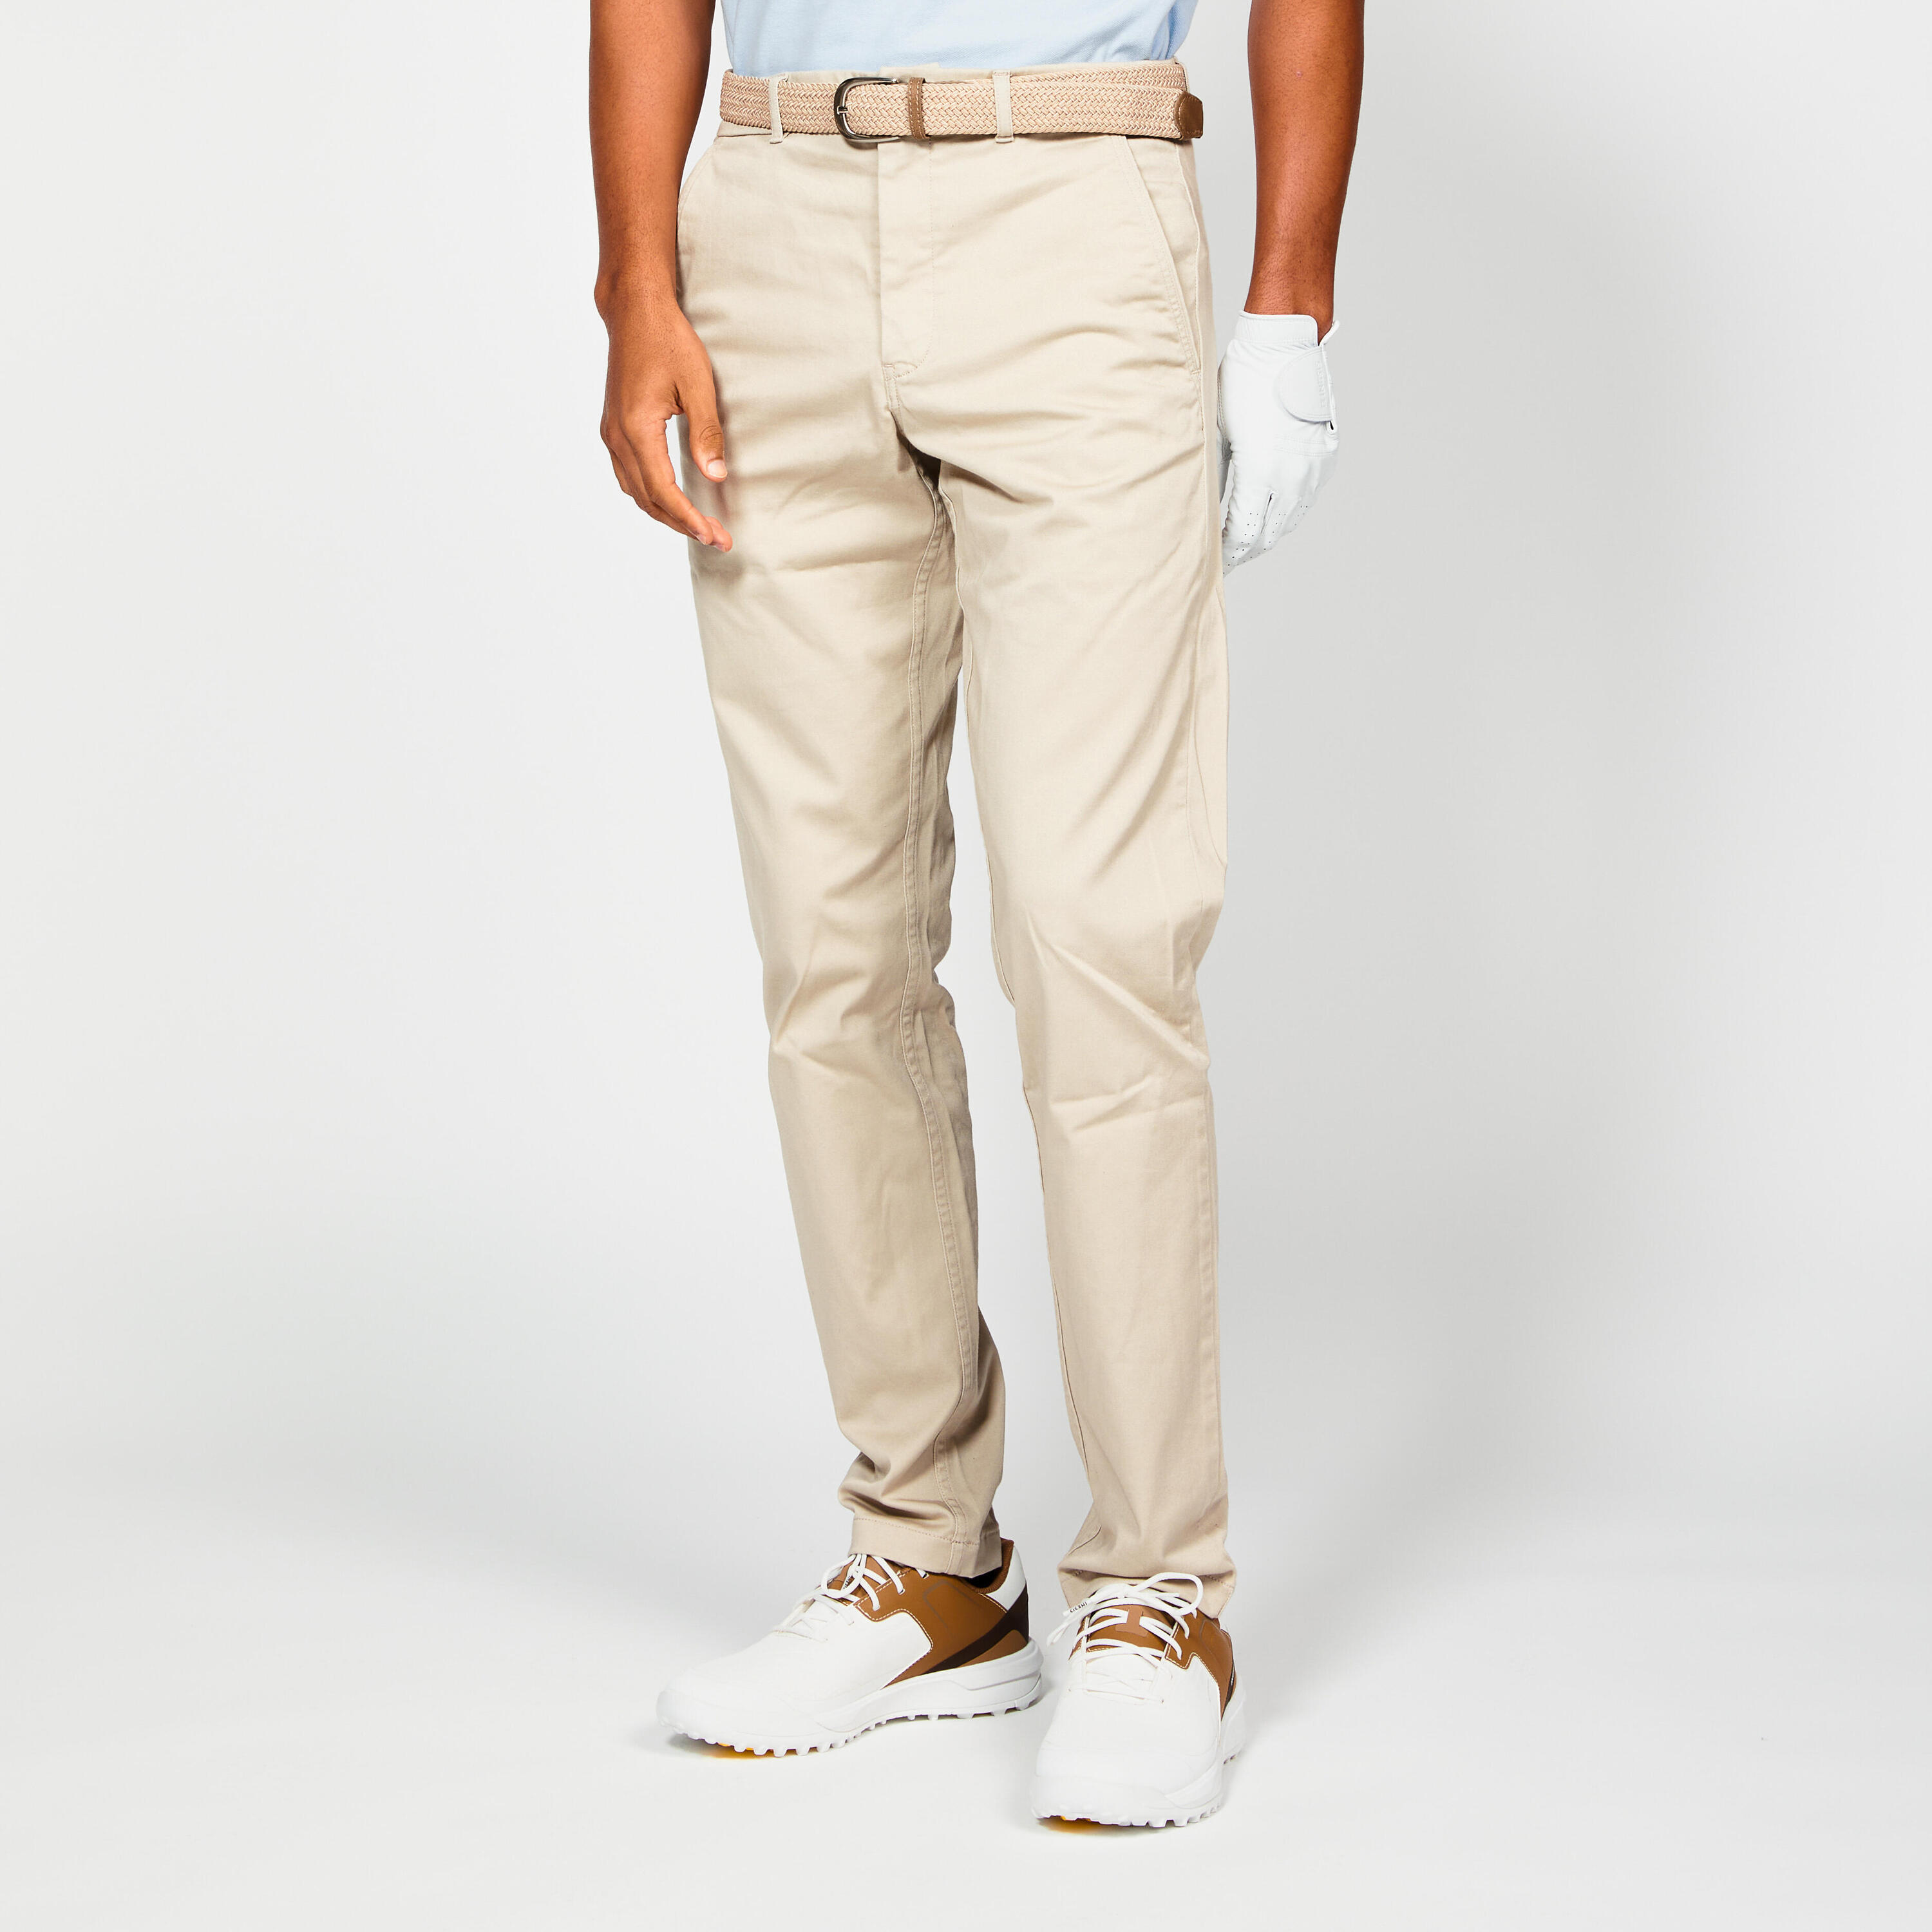 INESIS Men's golf cotton chino trousers - MW500 linen